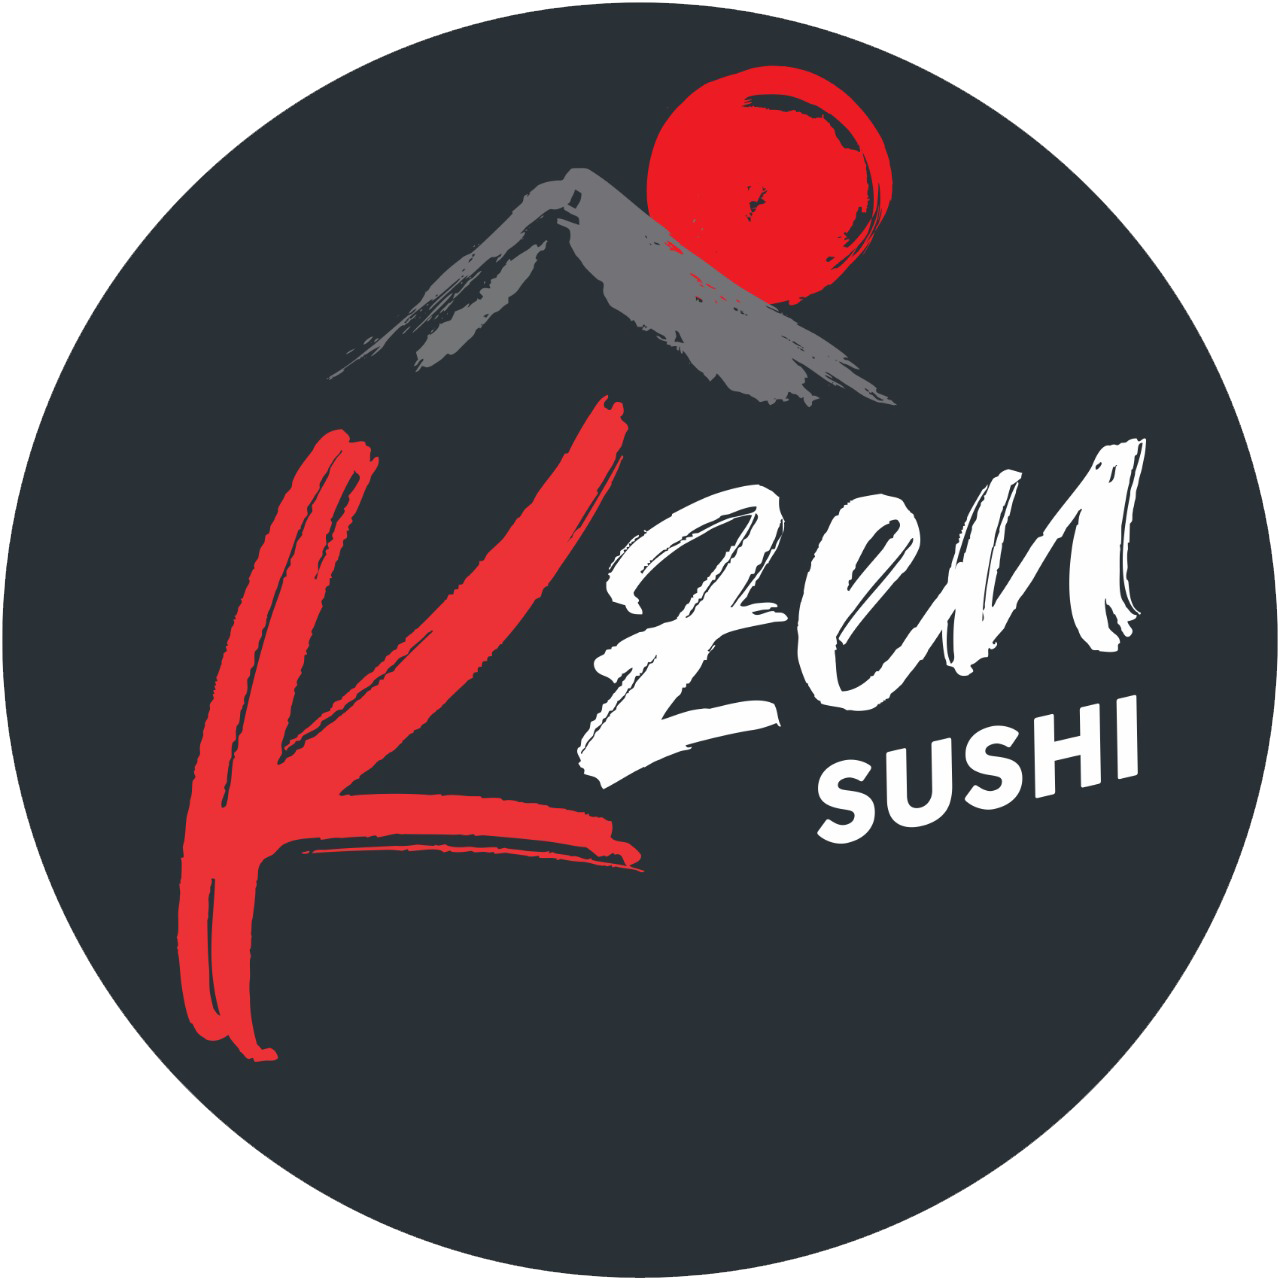 kzen sushi logo